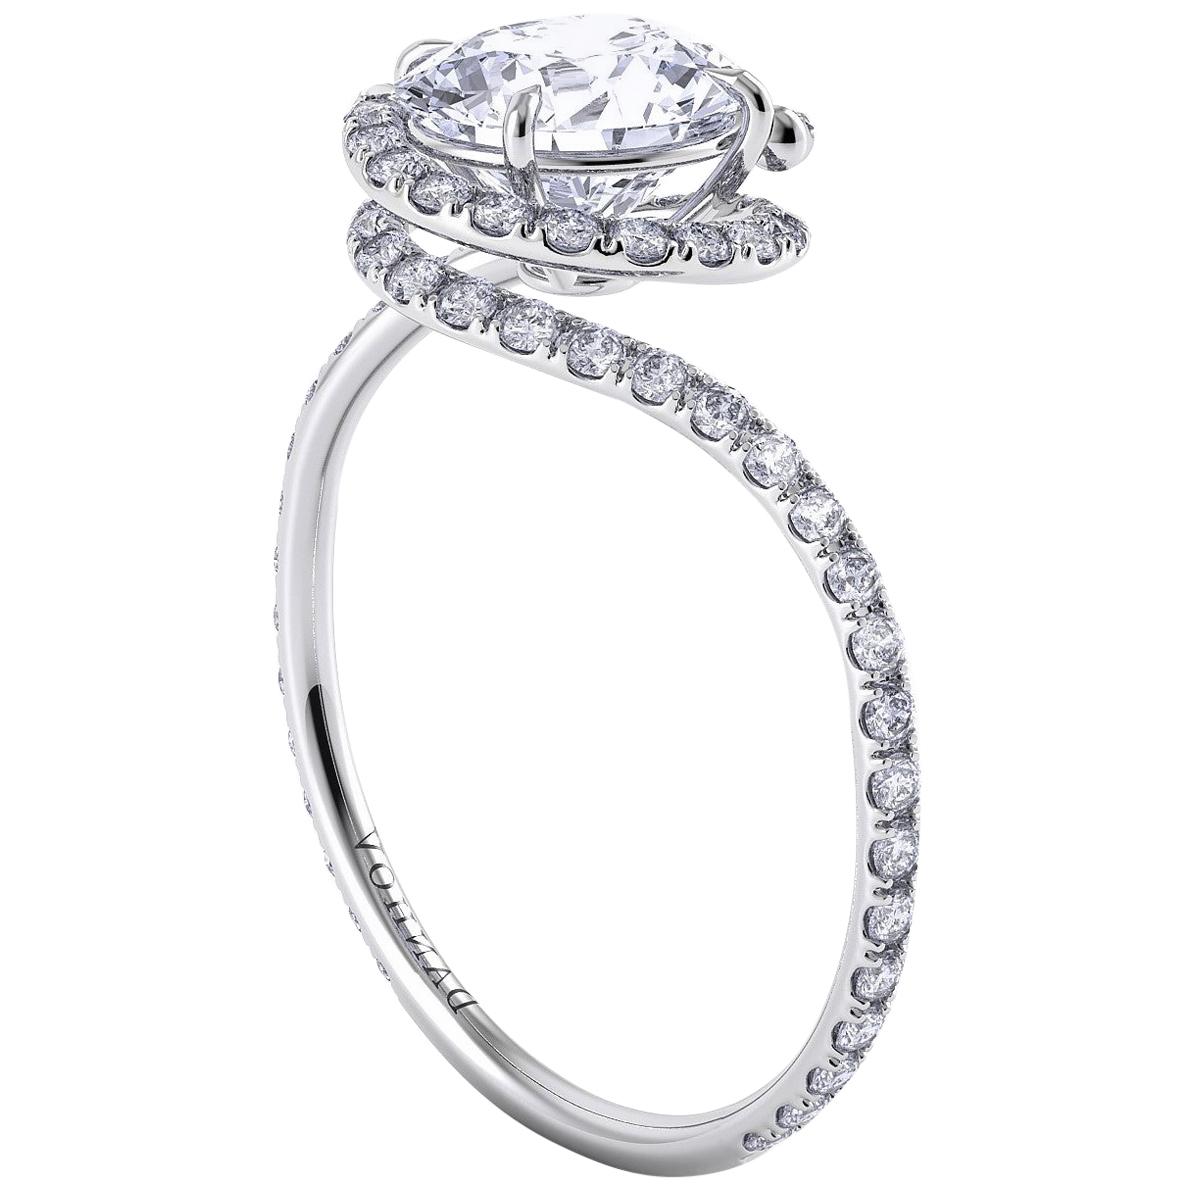 Danhov Abbraccio Award Winning Swirl Diamond Engagement Ring 'AE-100' For Sale